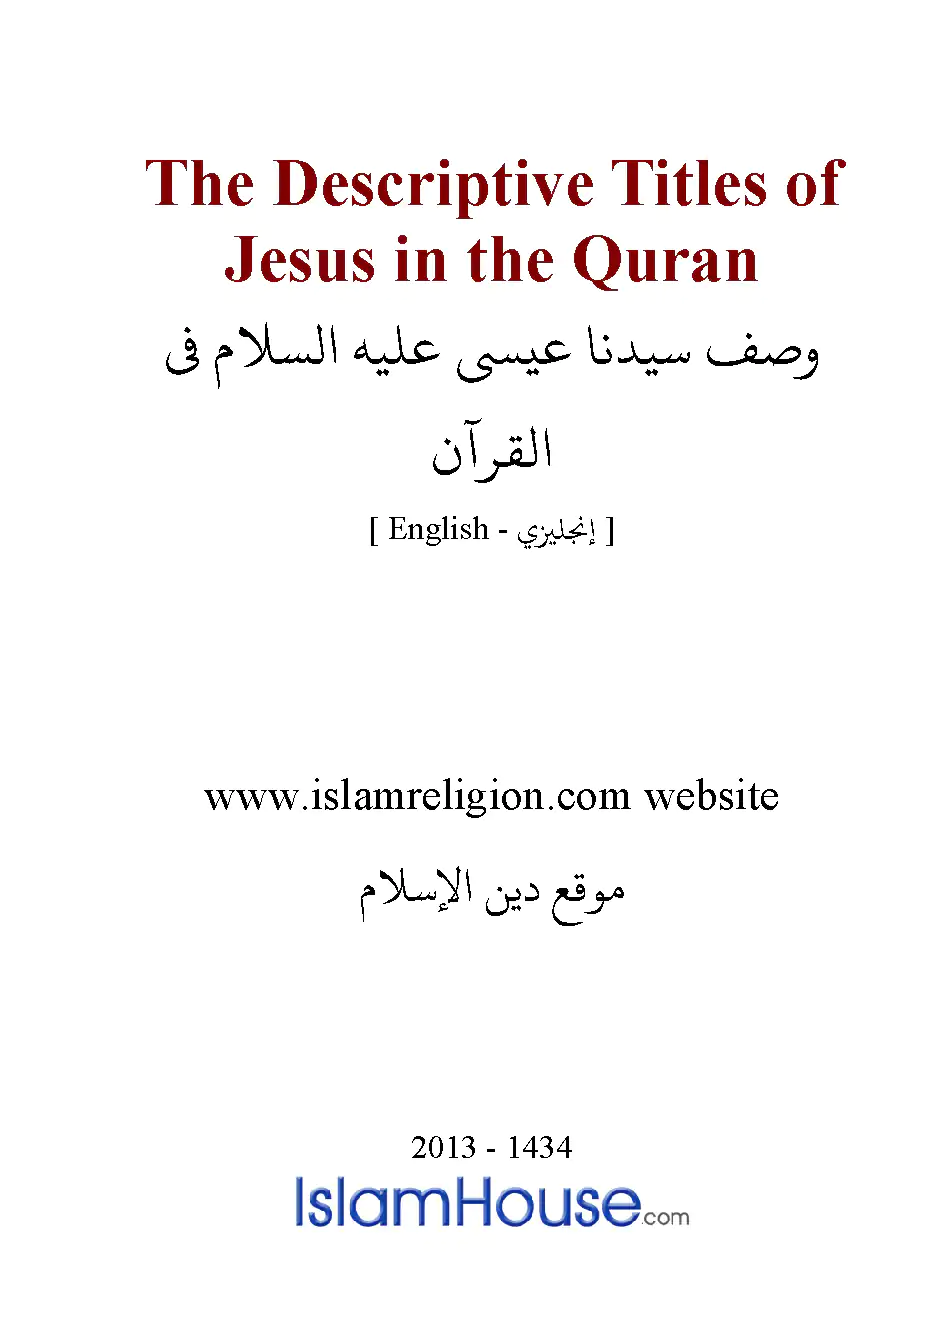 The Descriptive Titles of Jesus in the Quran